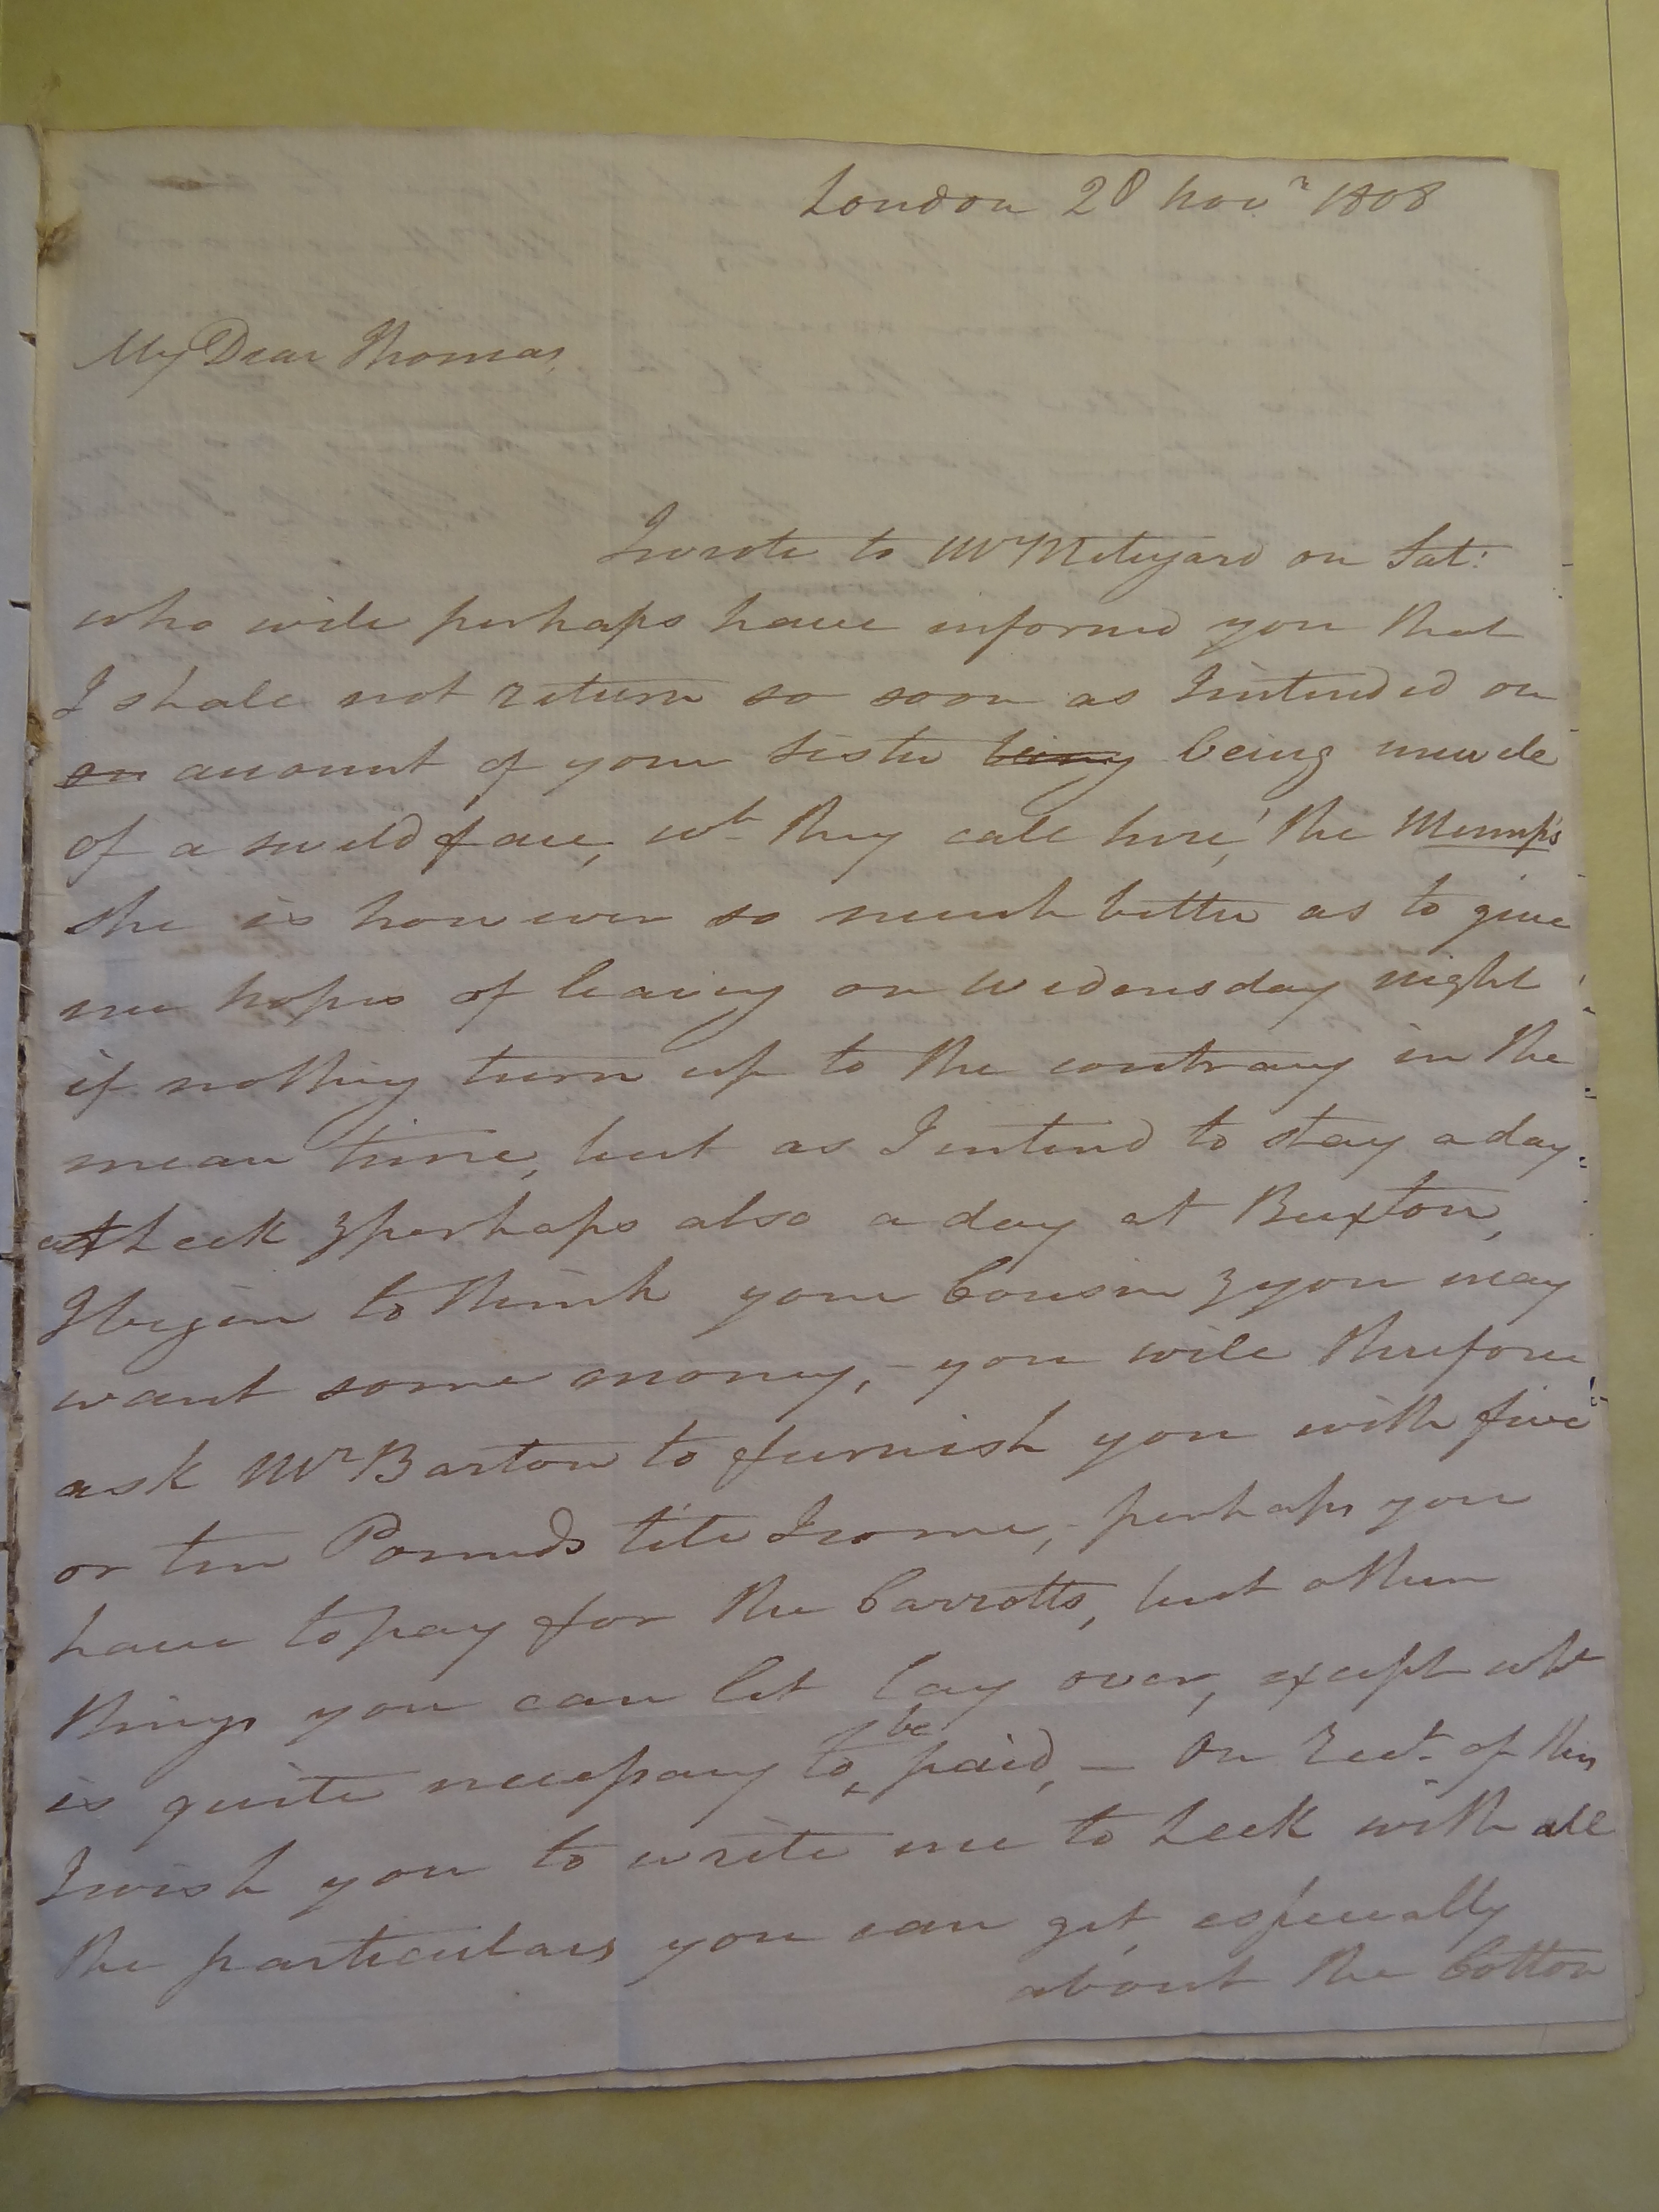 Image #1 of letter: Thomas Bateman (senior) to Thomas Bateman (junior), 28 November 1808